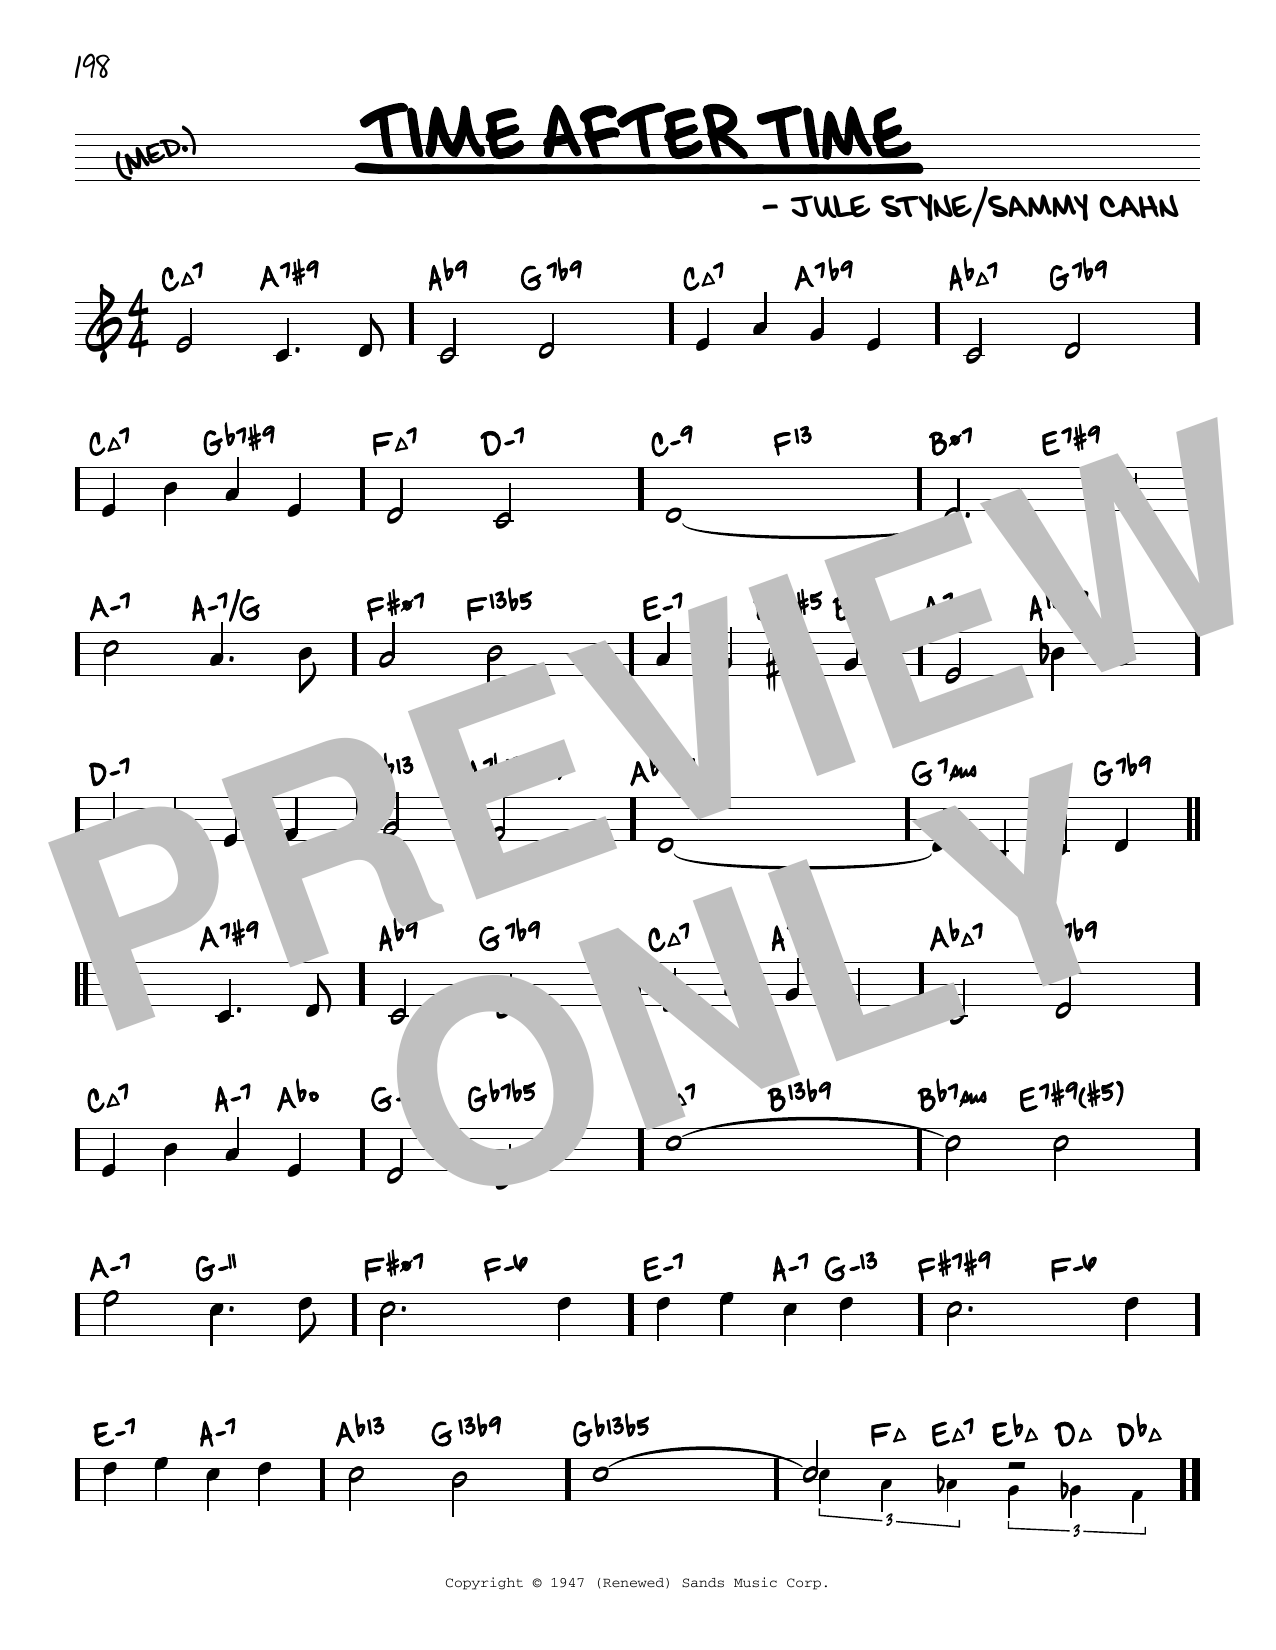 Sammy Cahn Time After Time (arr. David Hazeltine) Sheet Music Notes & Chords for Real Book – Enhanced Chords - Download or Print PDF